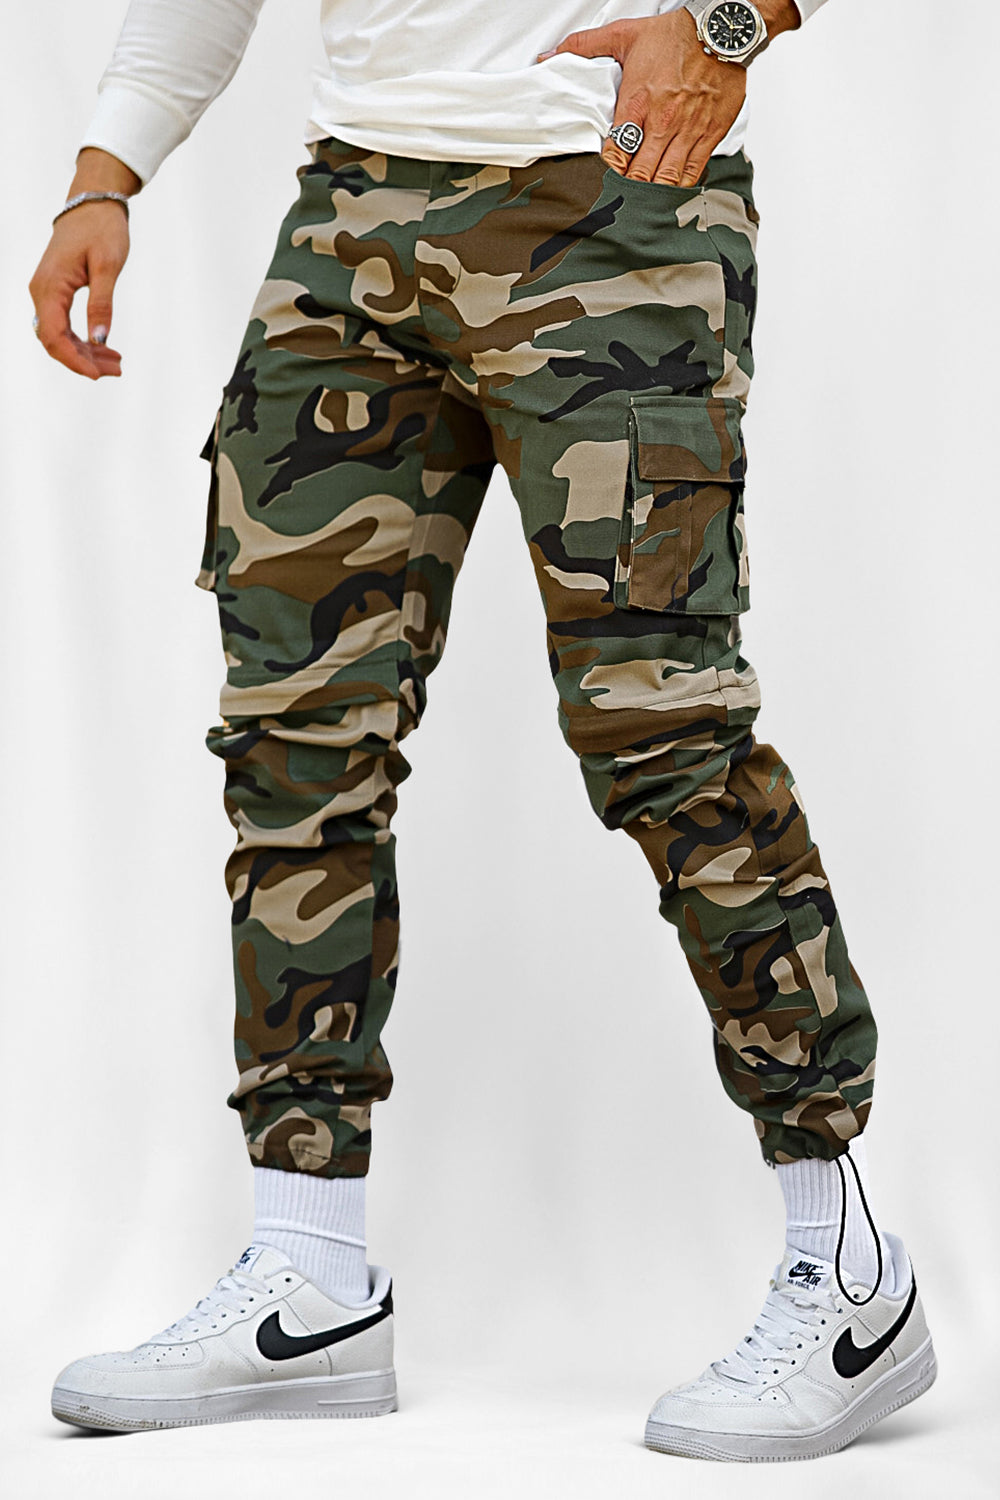 Mens Cargo Camo Pants Multi Pocket Lightweight Army Regular Fit Camo Green  42x30 